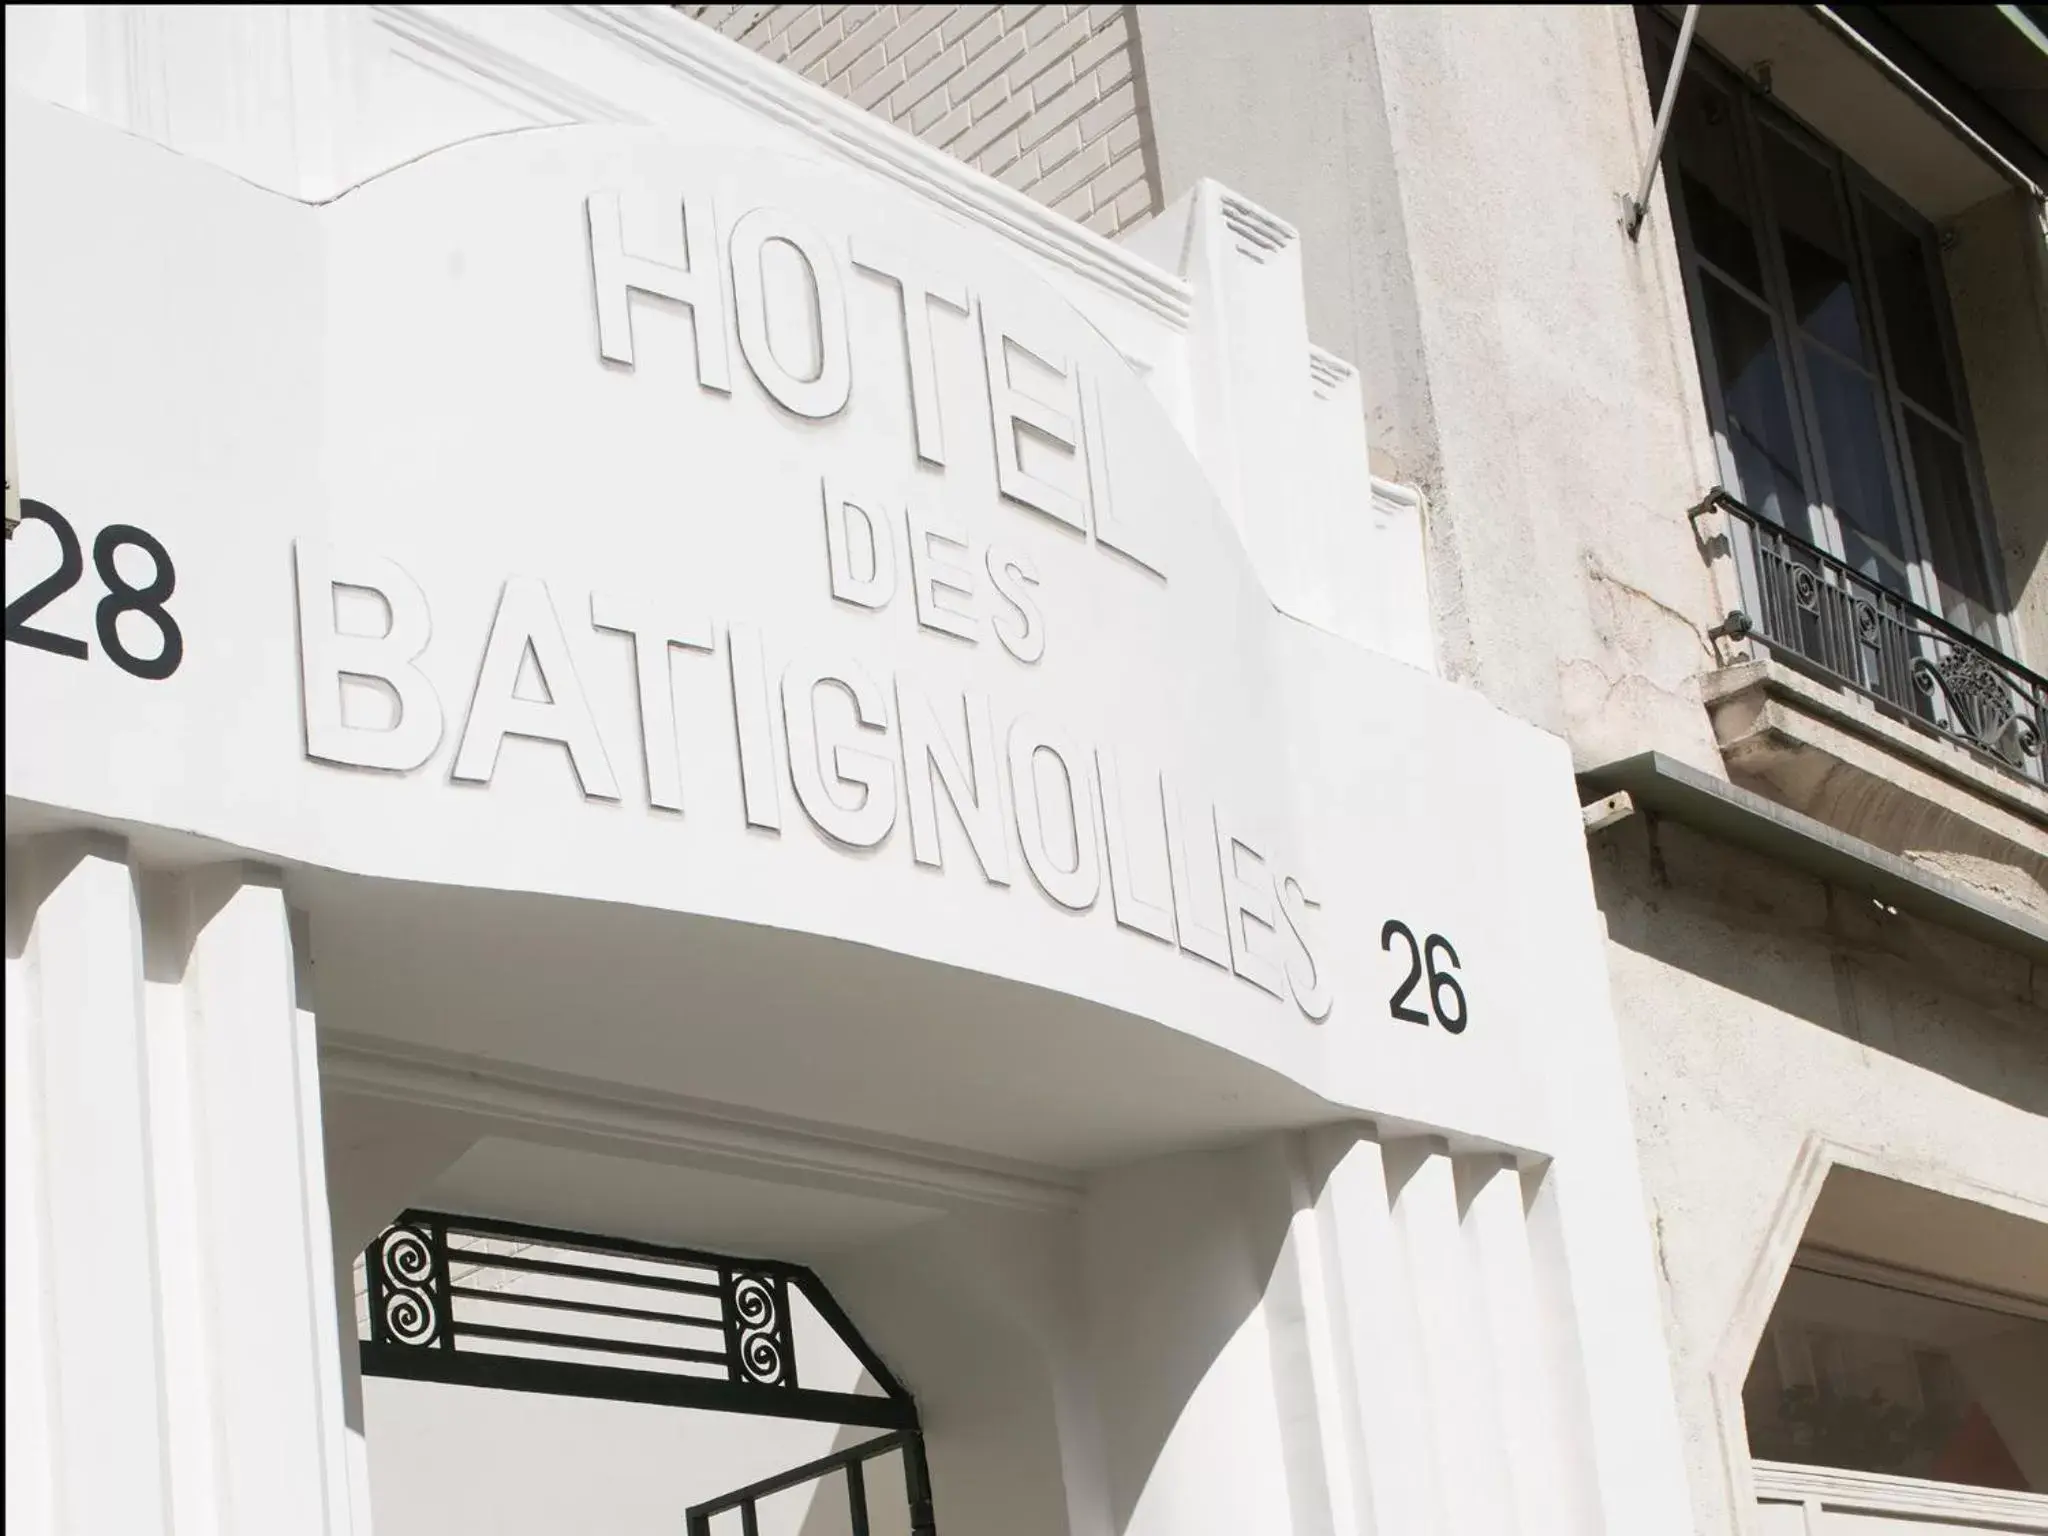 Property building in Hôtel Des Batignolles